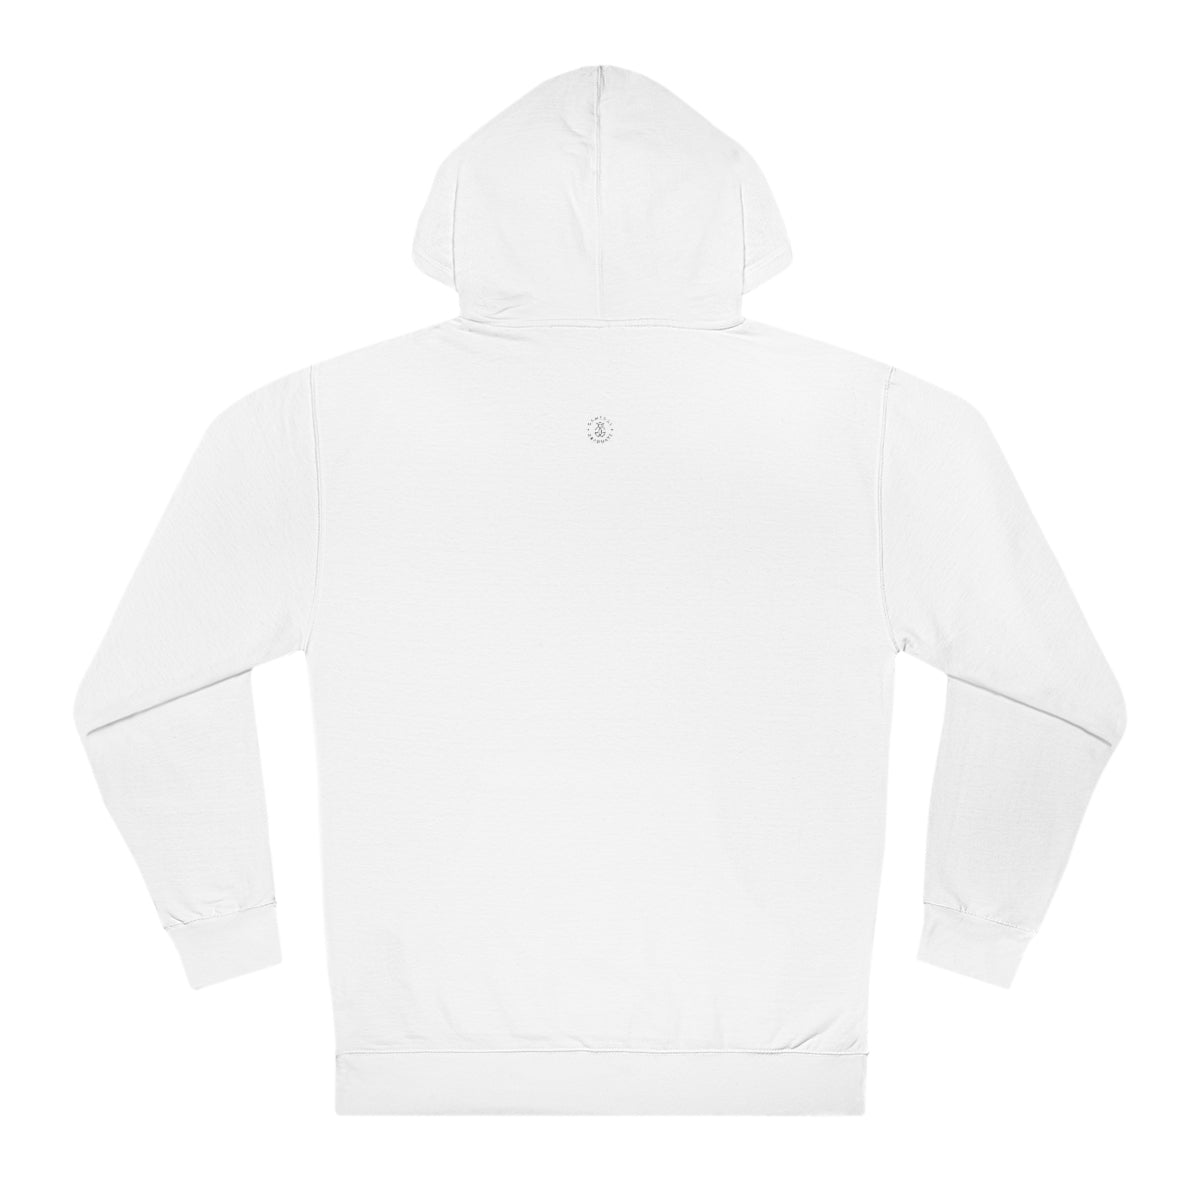 Smiley Stillwater Hooded Sweatshirt - GG - ITC